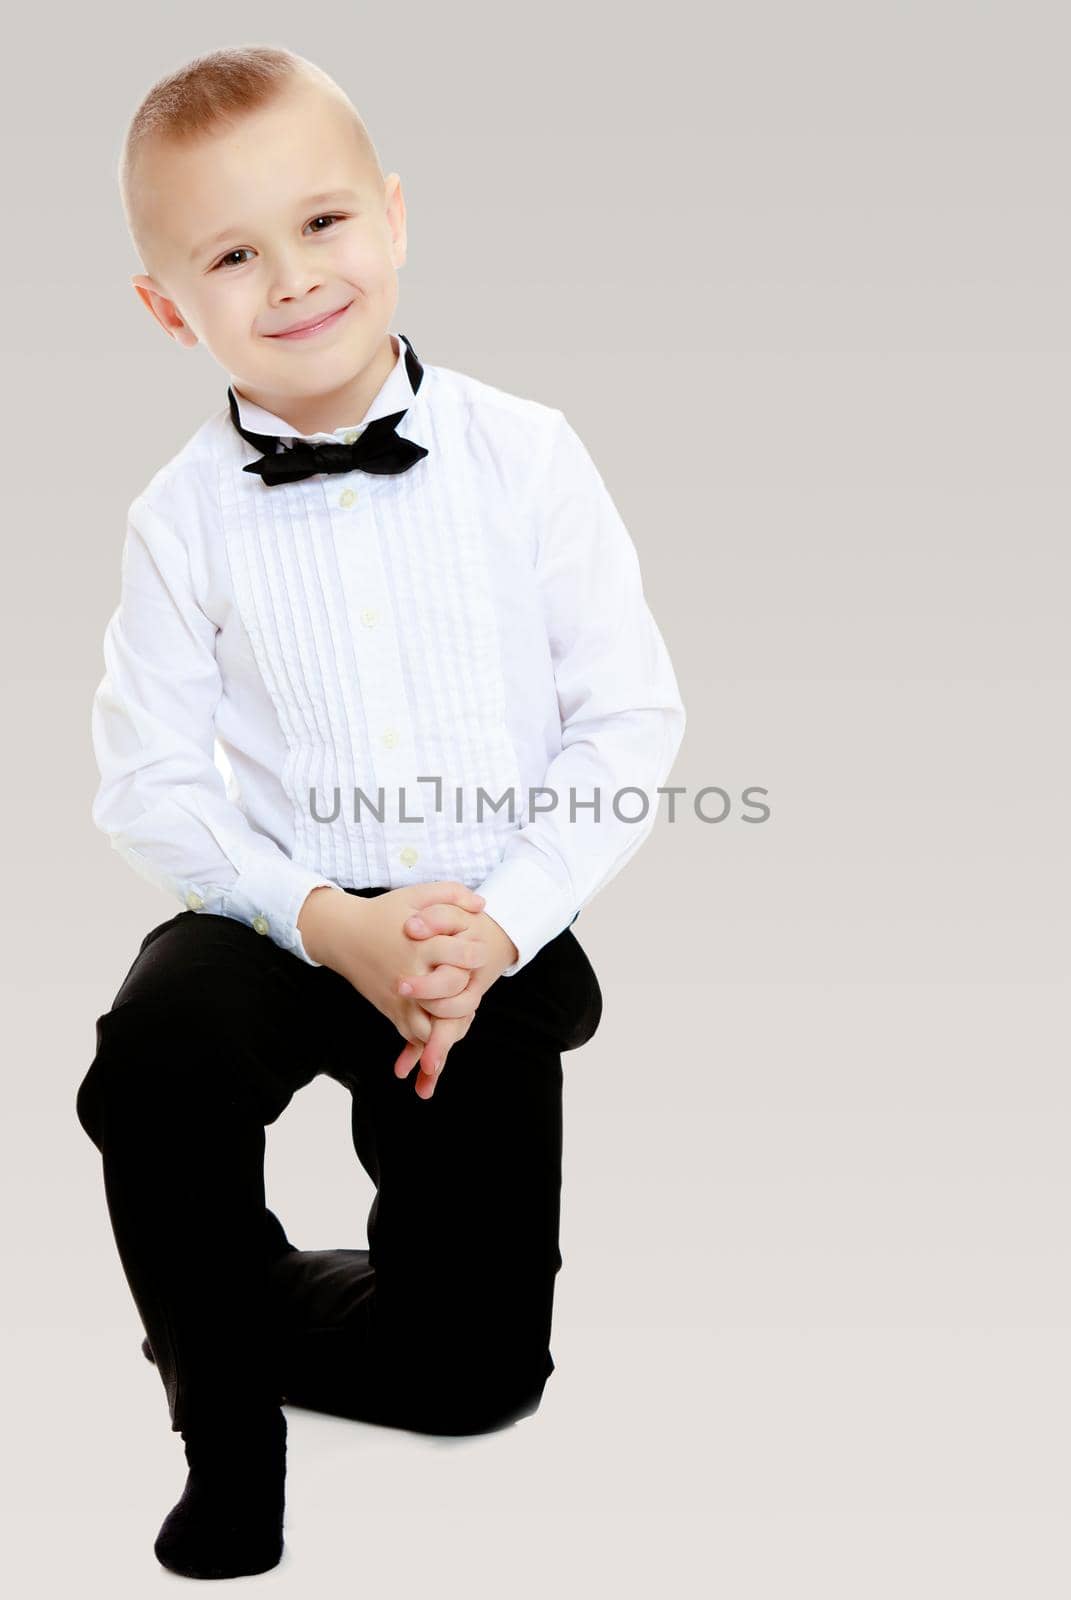 little boy in a white shirt and tie. by kolesnikov_studio